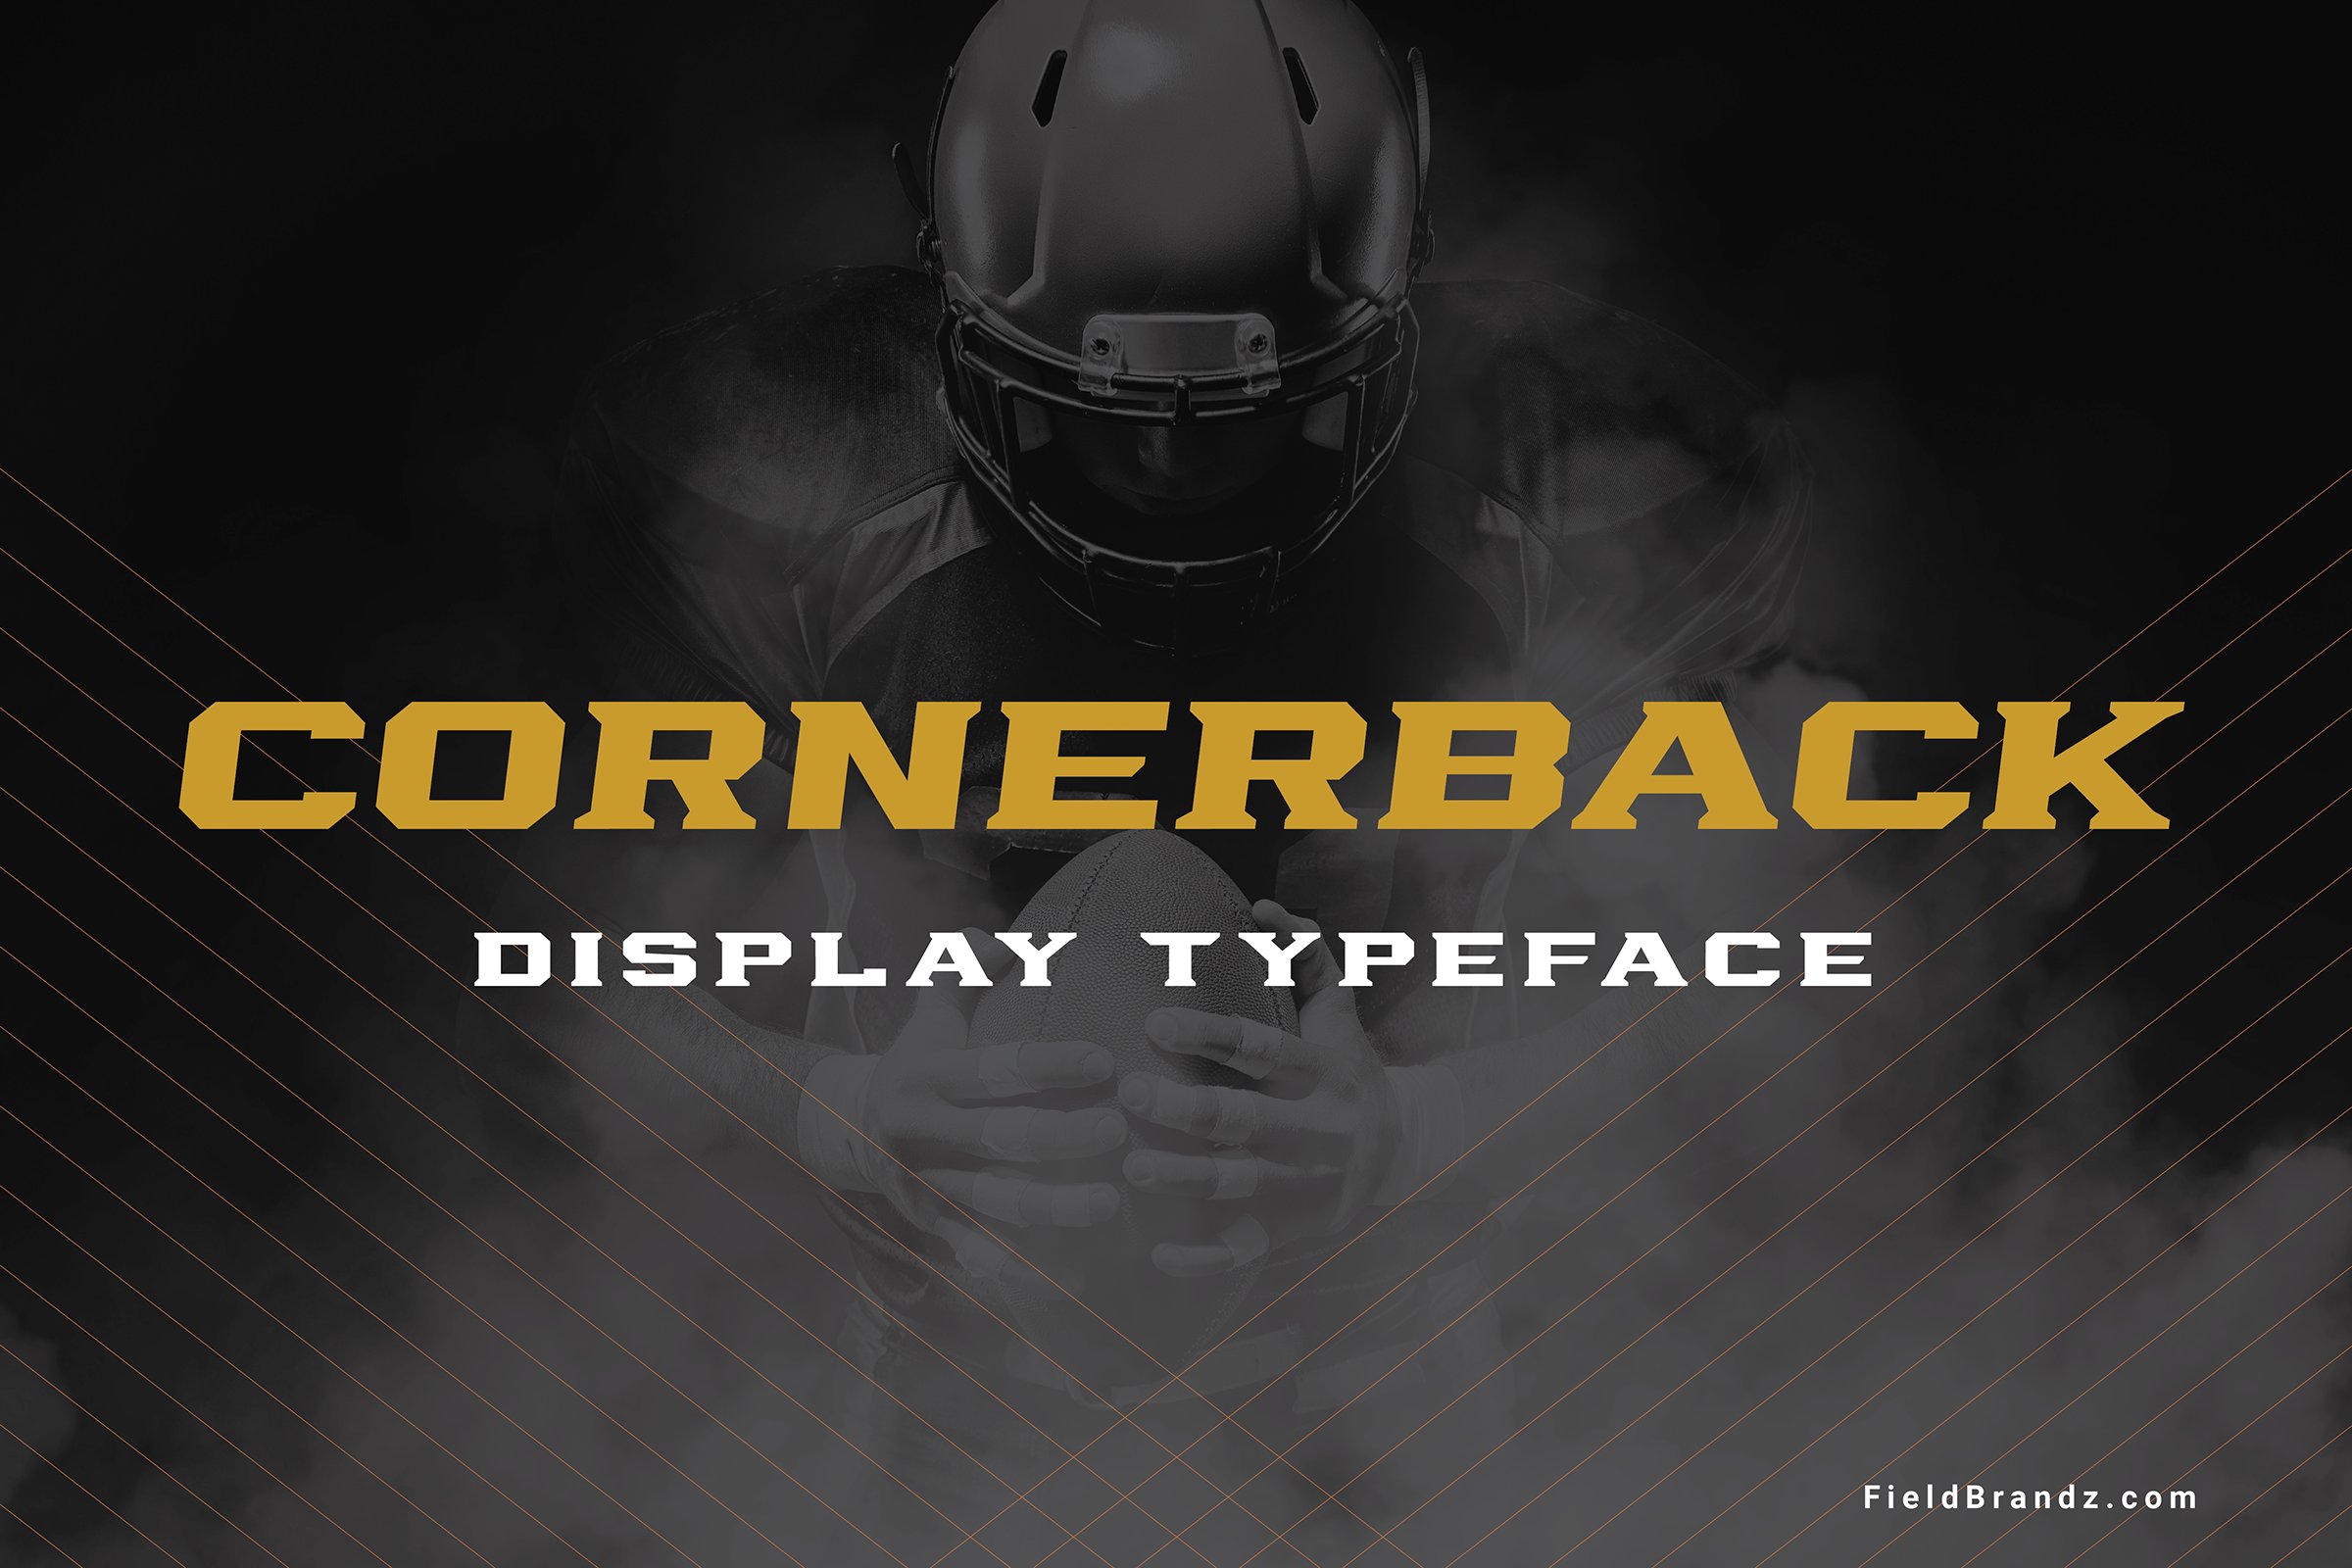 Cornerback Display Typeface cover image.